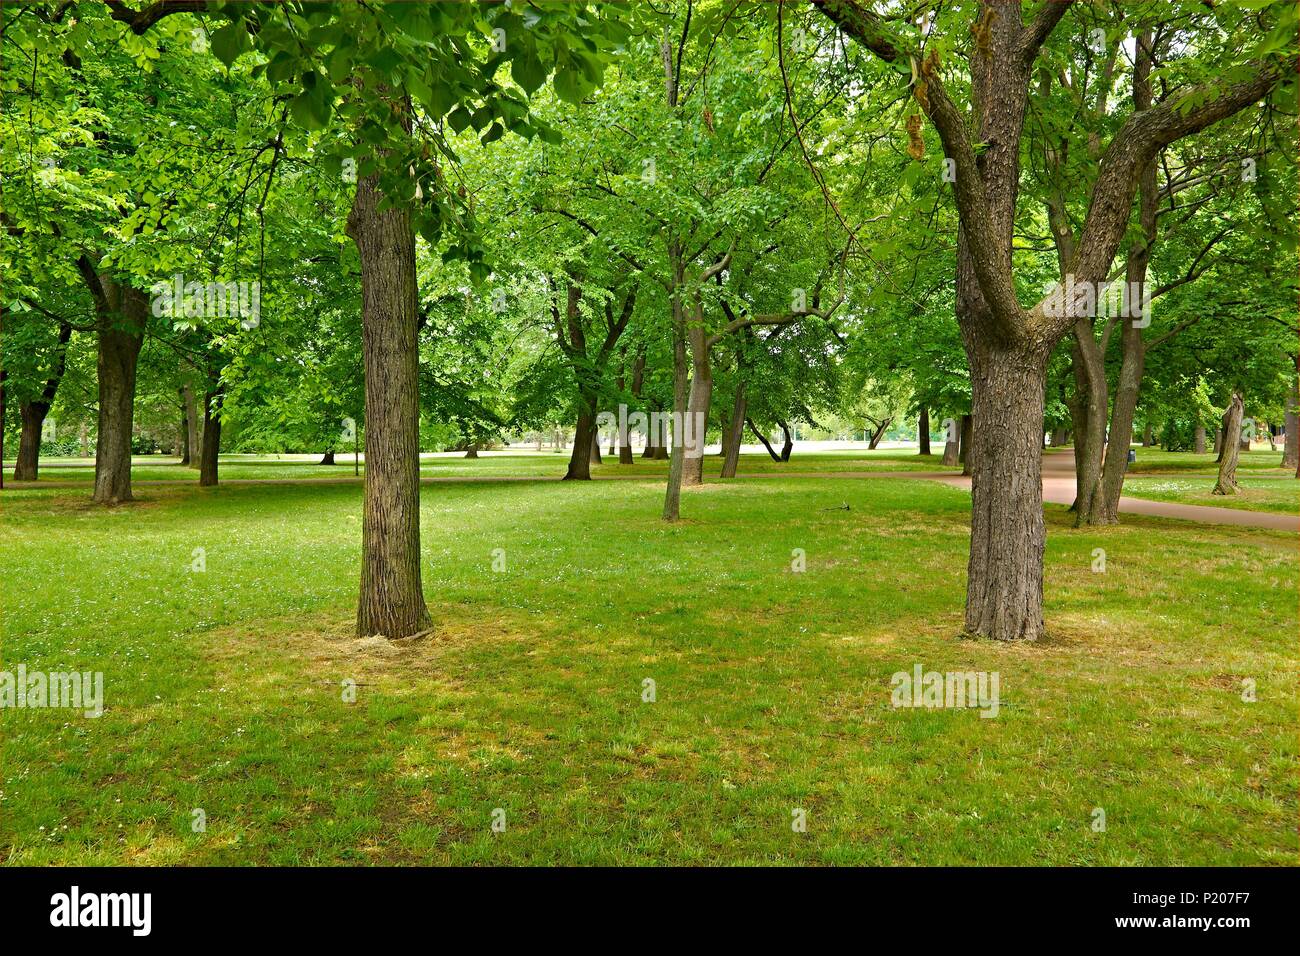 Verdi alberi in un parco Foto Stock